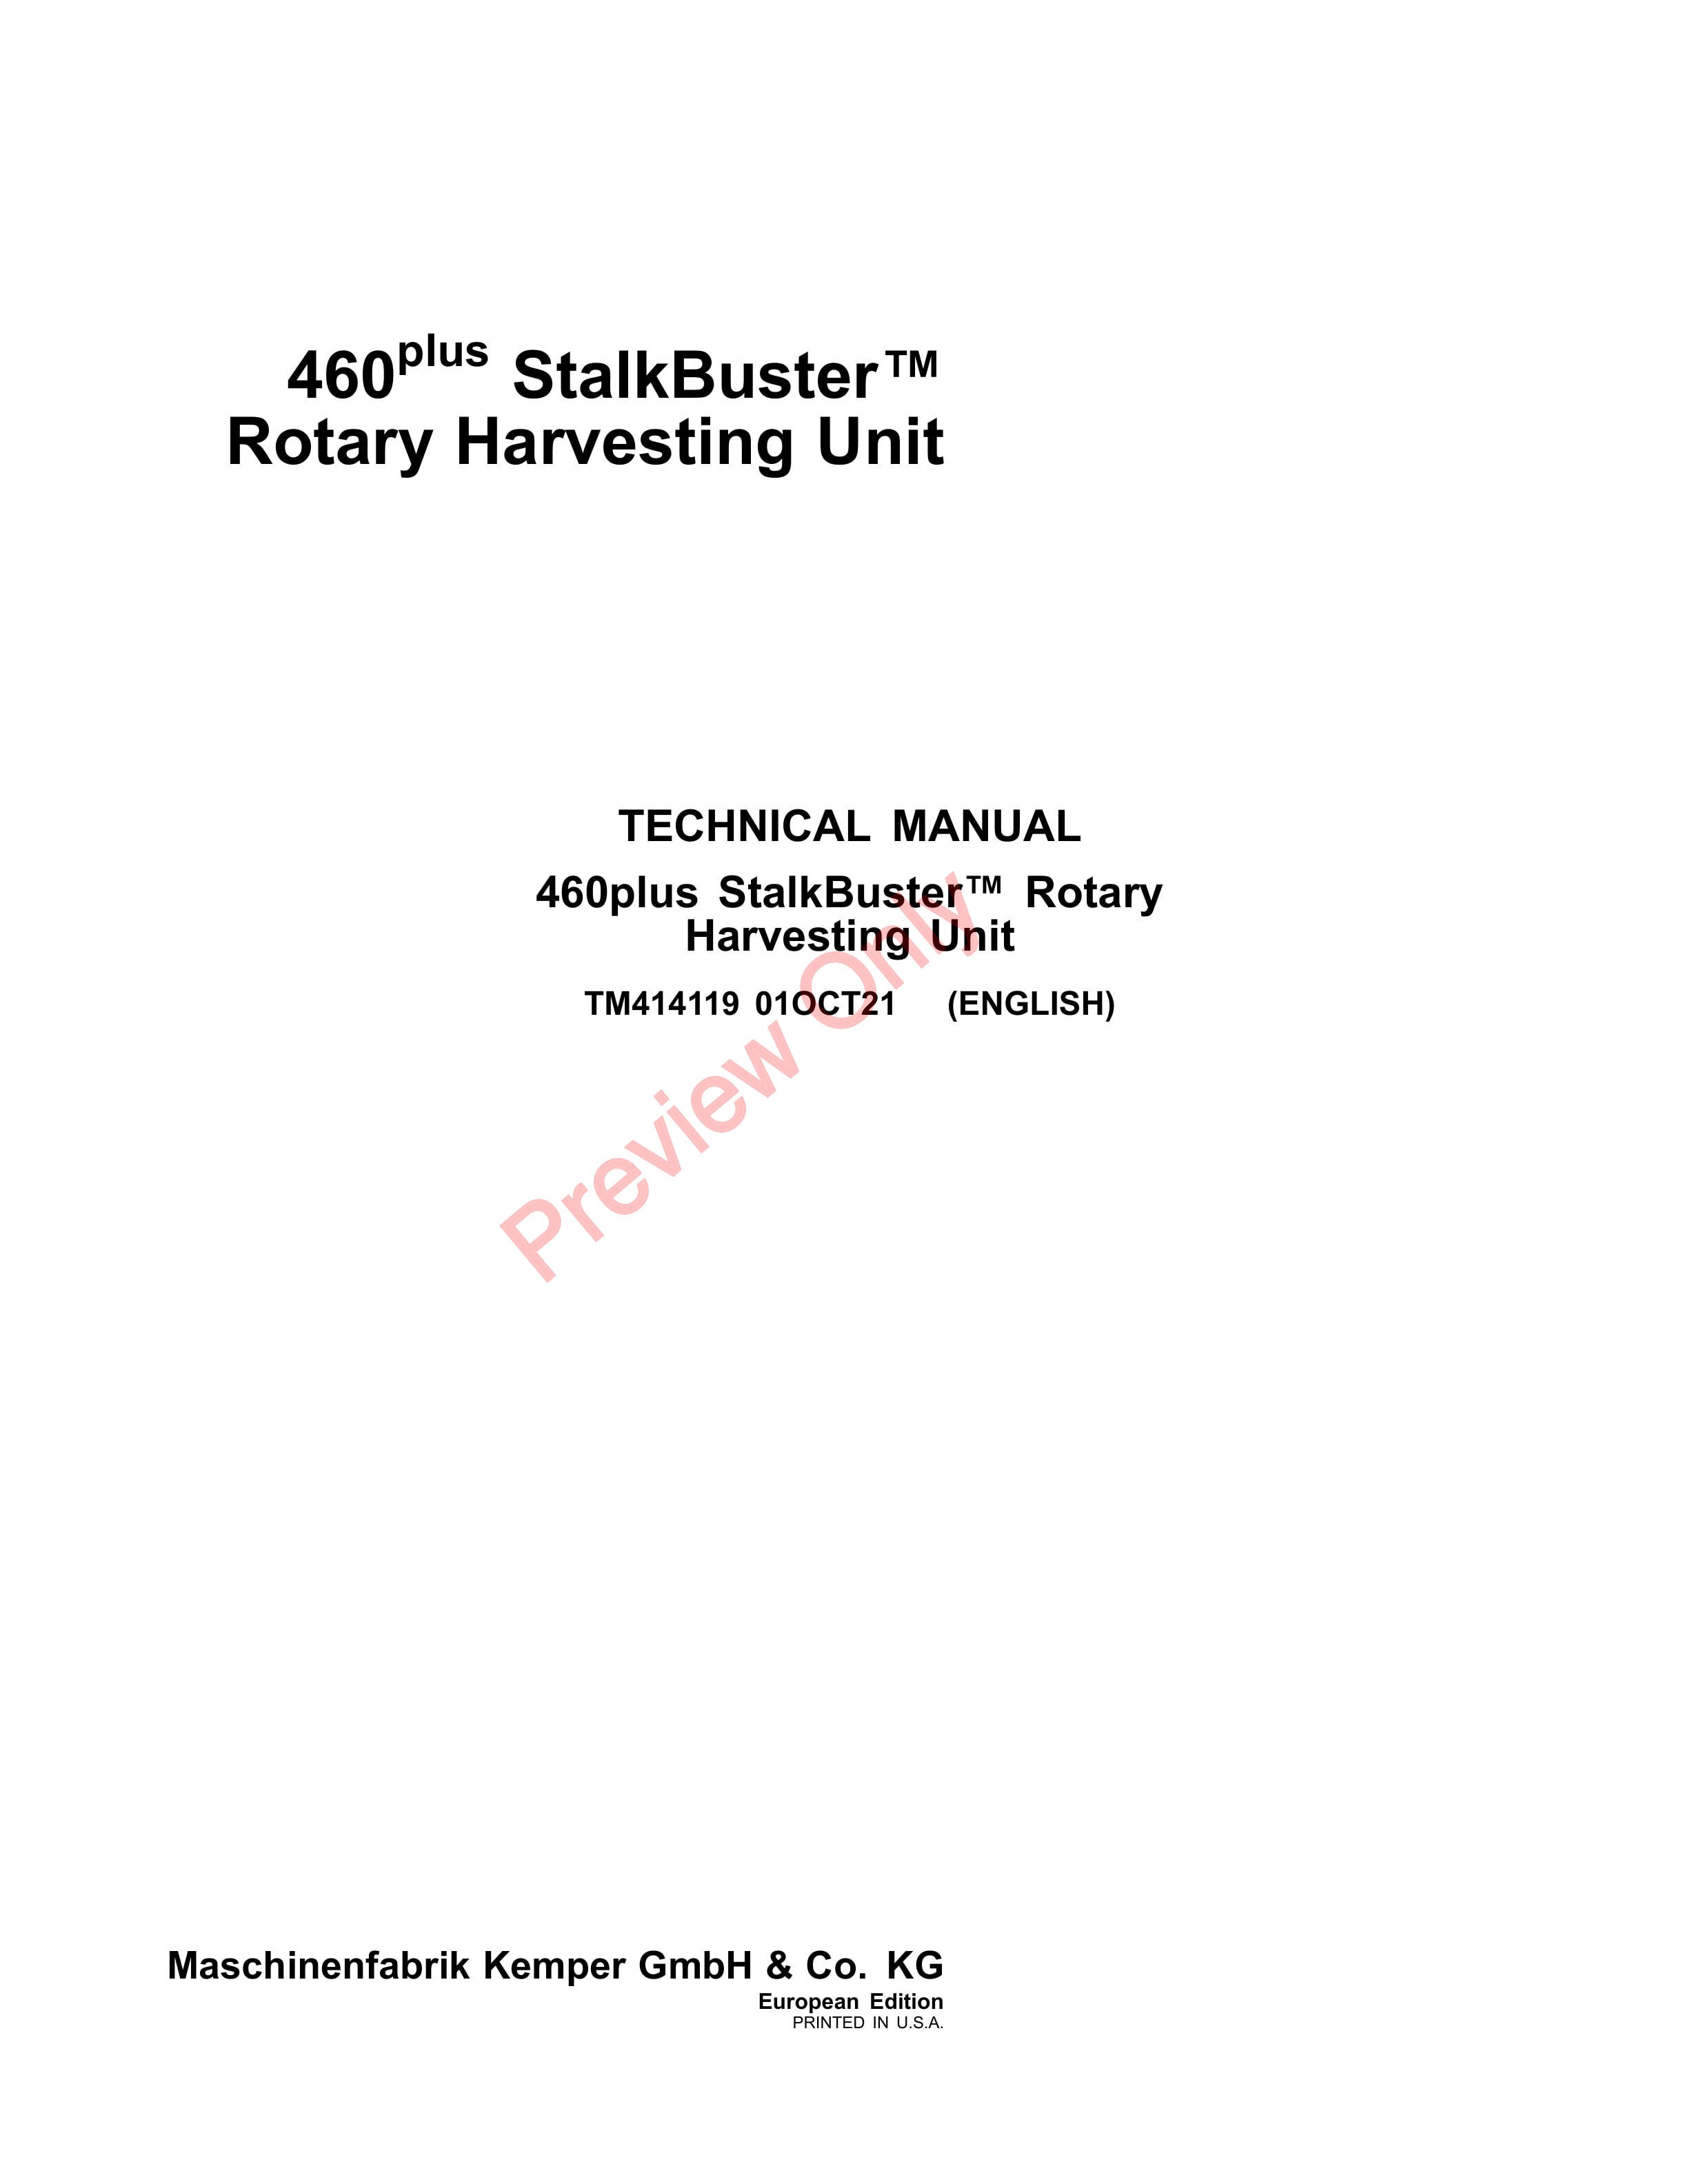 John Deere 460plus StalkBuster Rotary Harvesting Unit Technical Manual TM414119 01OCT21-1